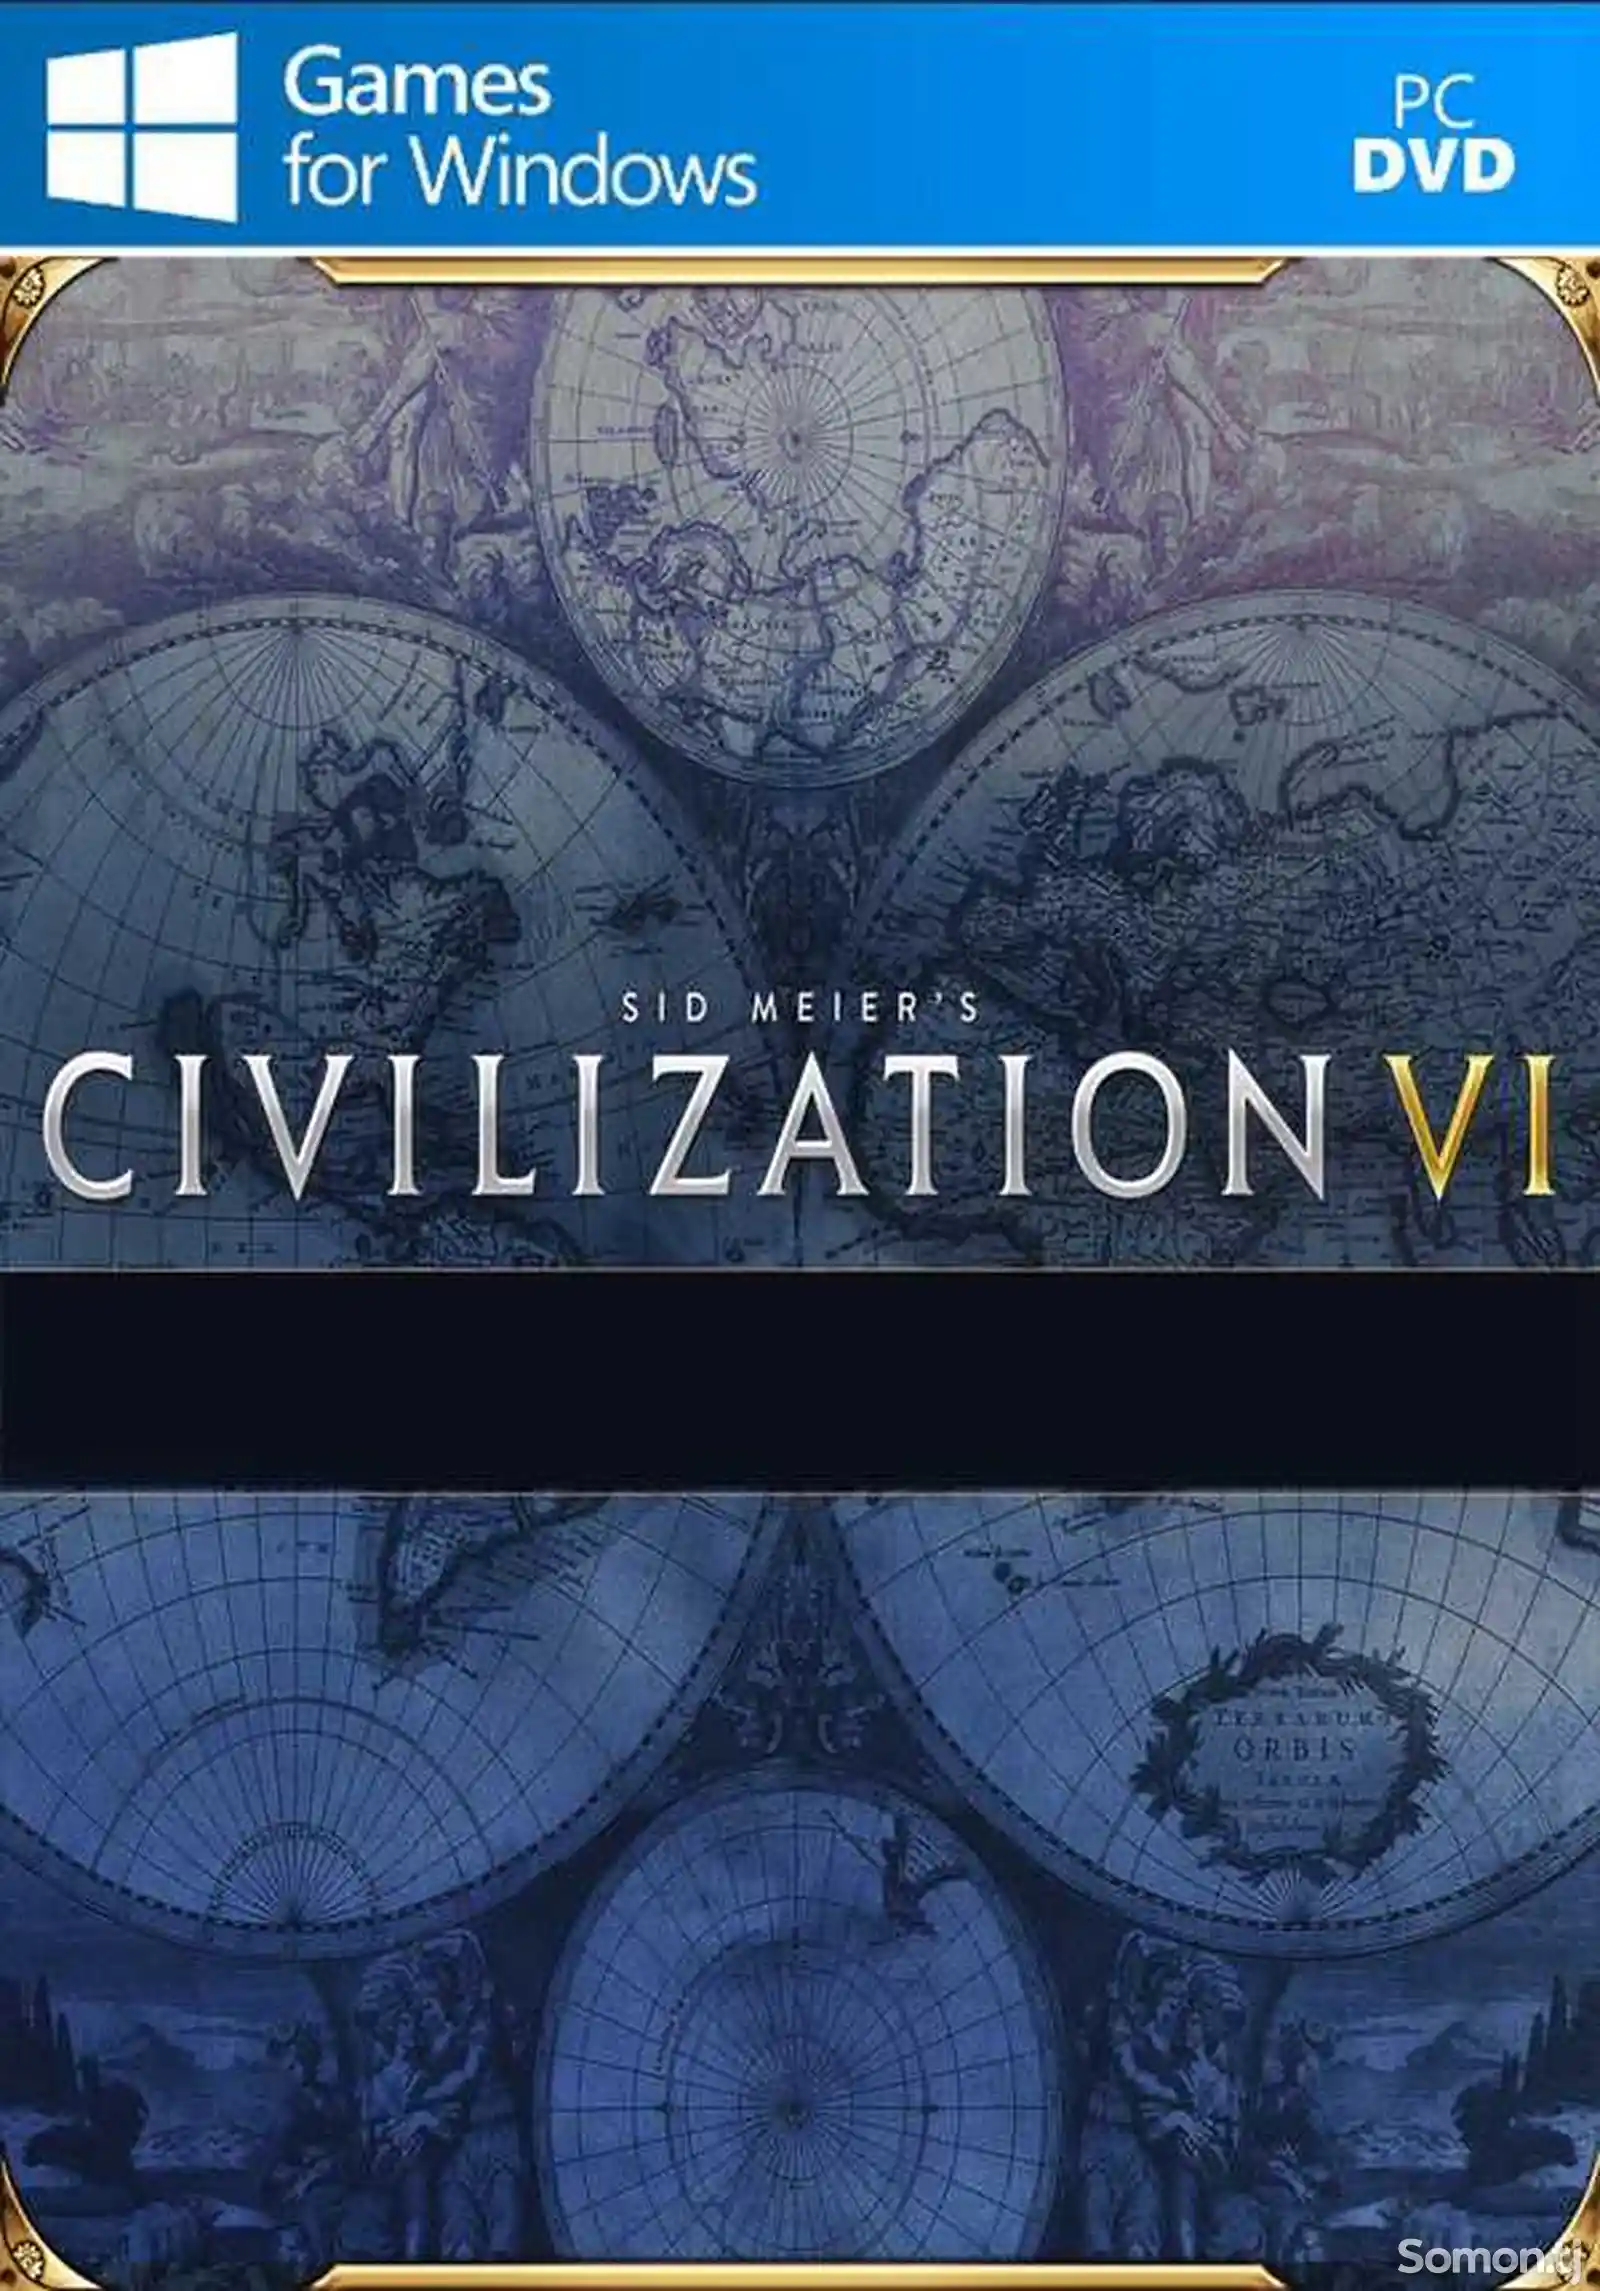 Игра Sid meiers civilization VI для компьютера-пк-pc-1